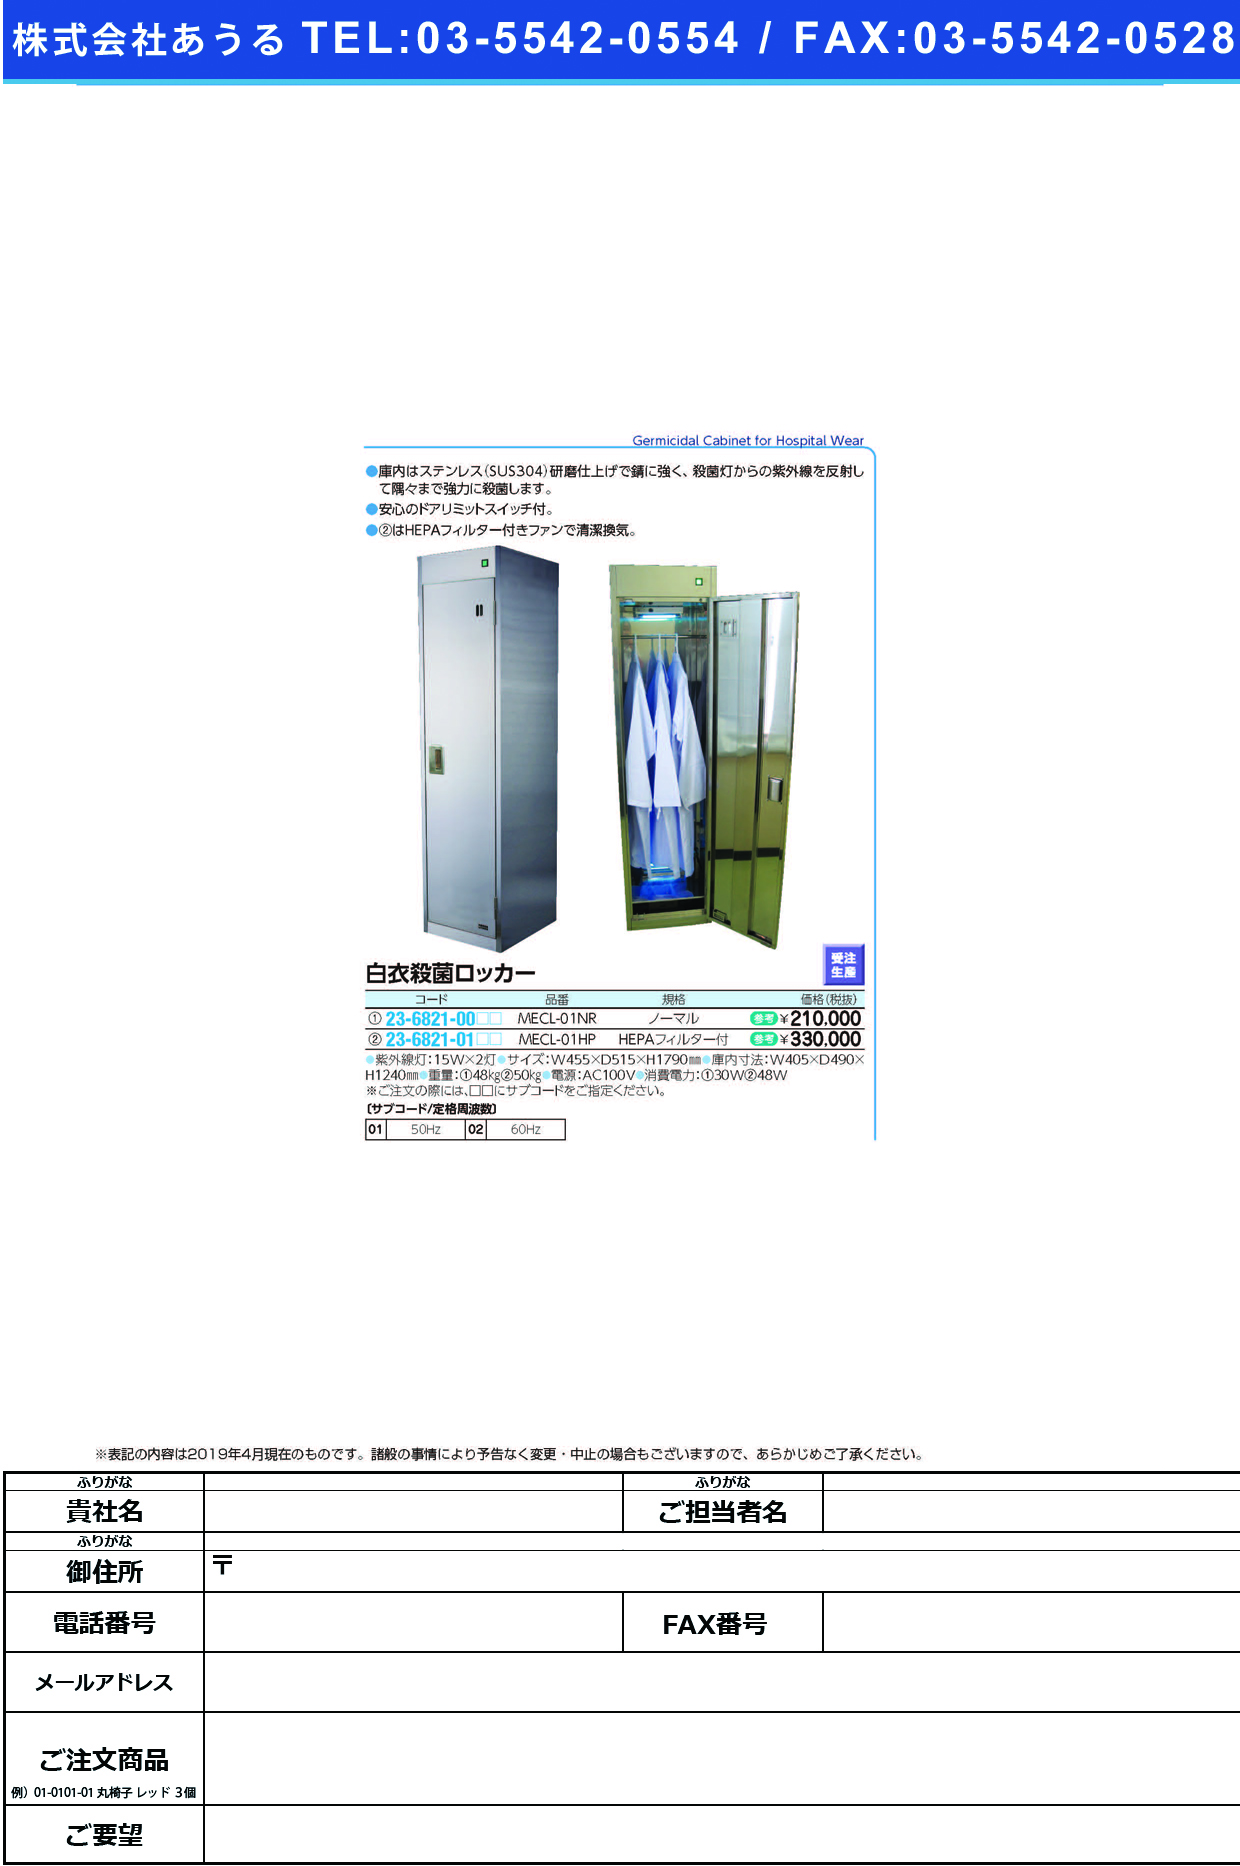 (23-6821-00)白衣殺菌ロッカー MECL-01NR(ﾉｰﾏﾙ) ﾊｸｲｻｯｷﾝﾛｯｶｰ ６０Ｈｚ【1台単位】【2019年カタログ商品】